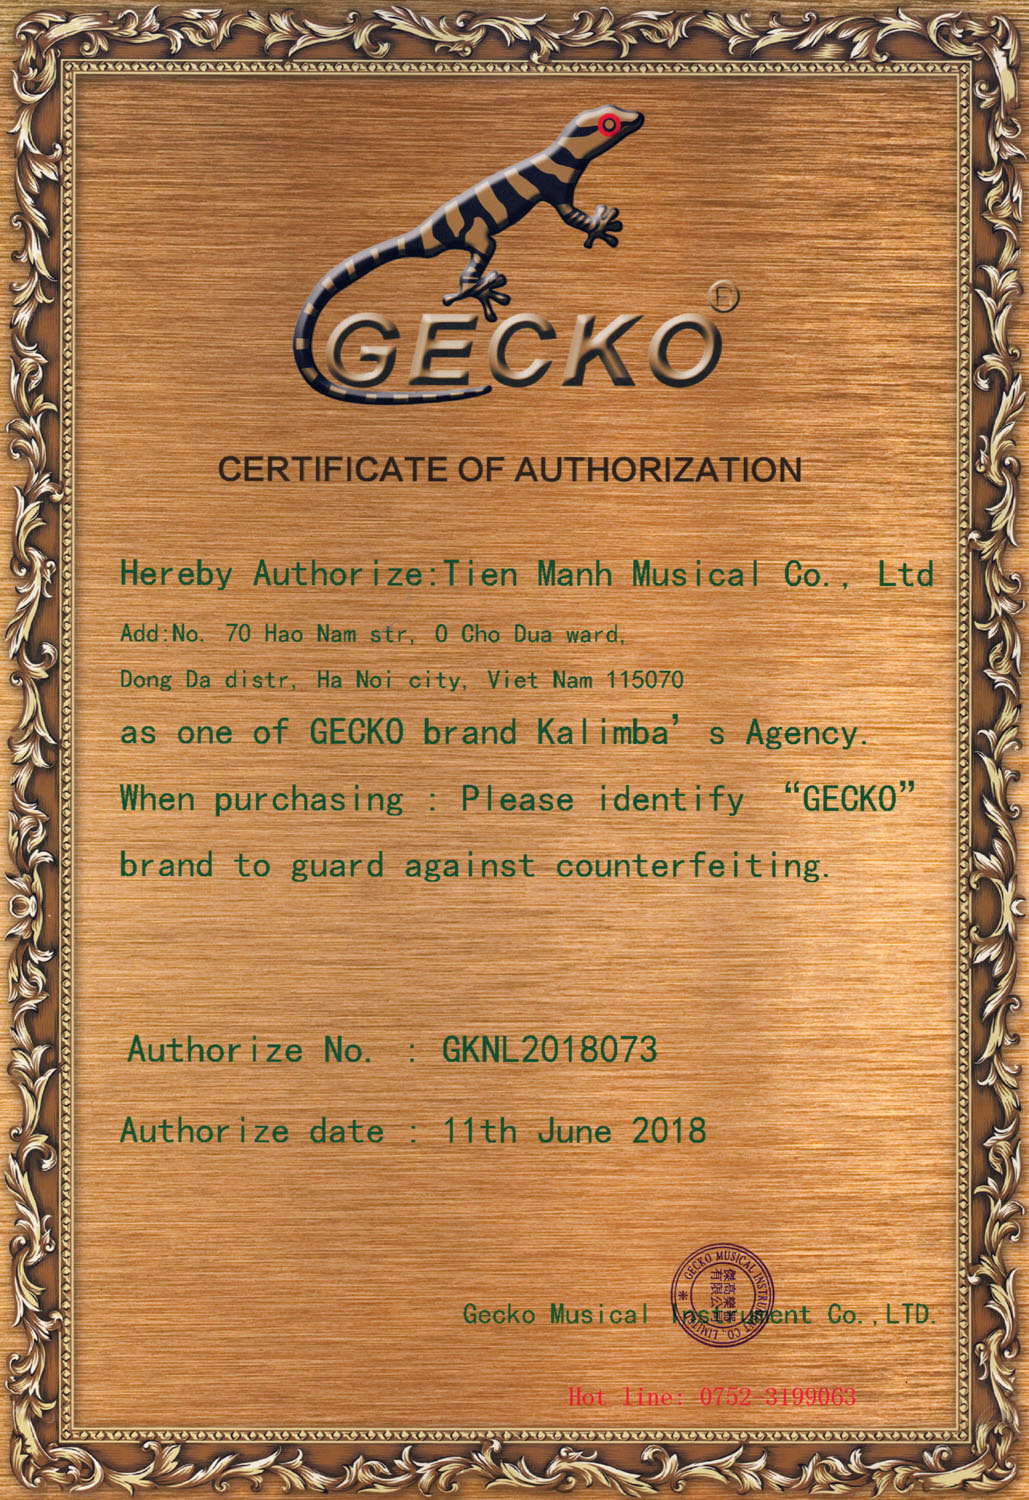 43-Certificate-Gecko-Authorization-Tien-Manh-Music.jpg